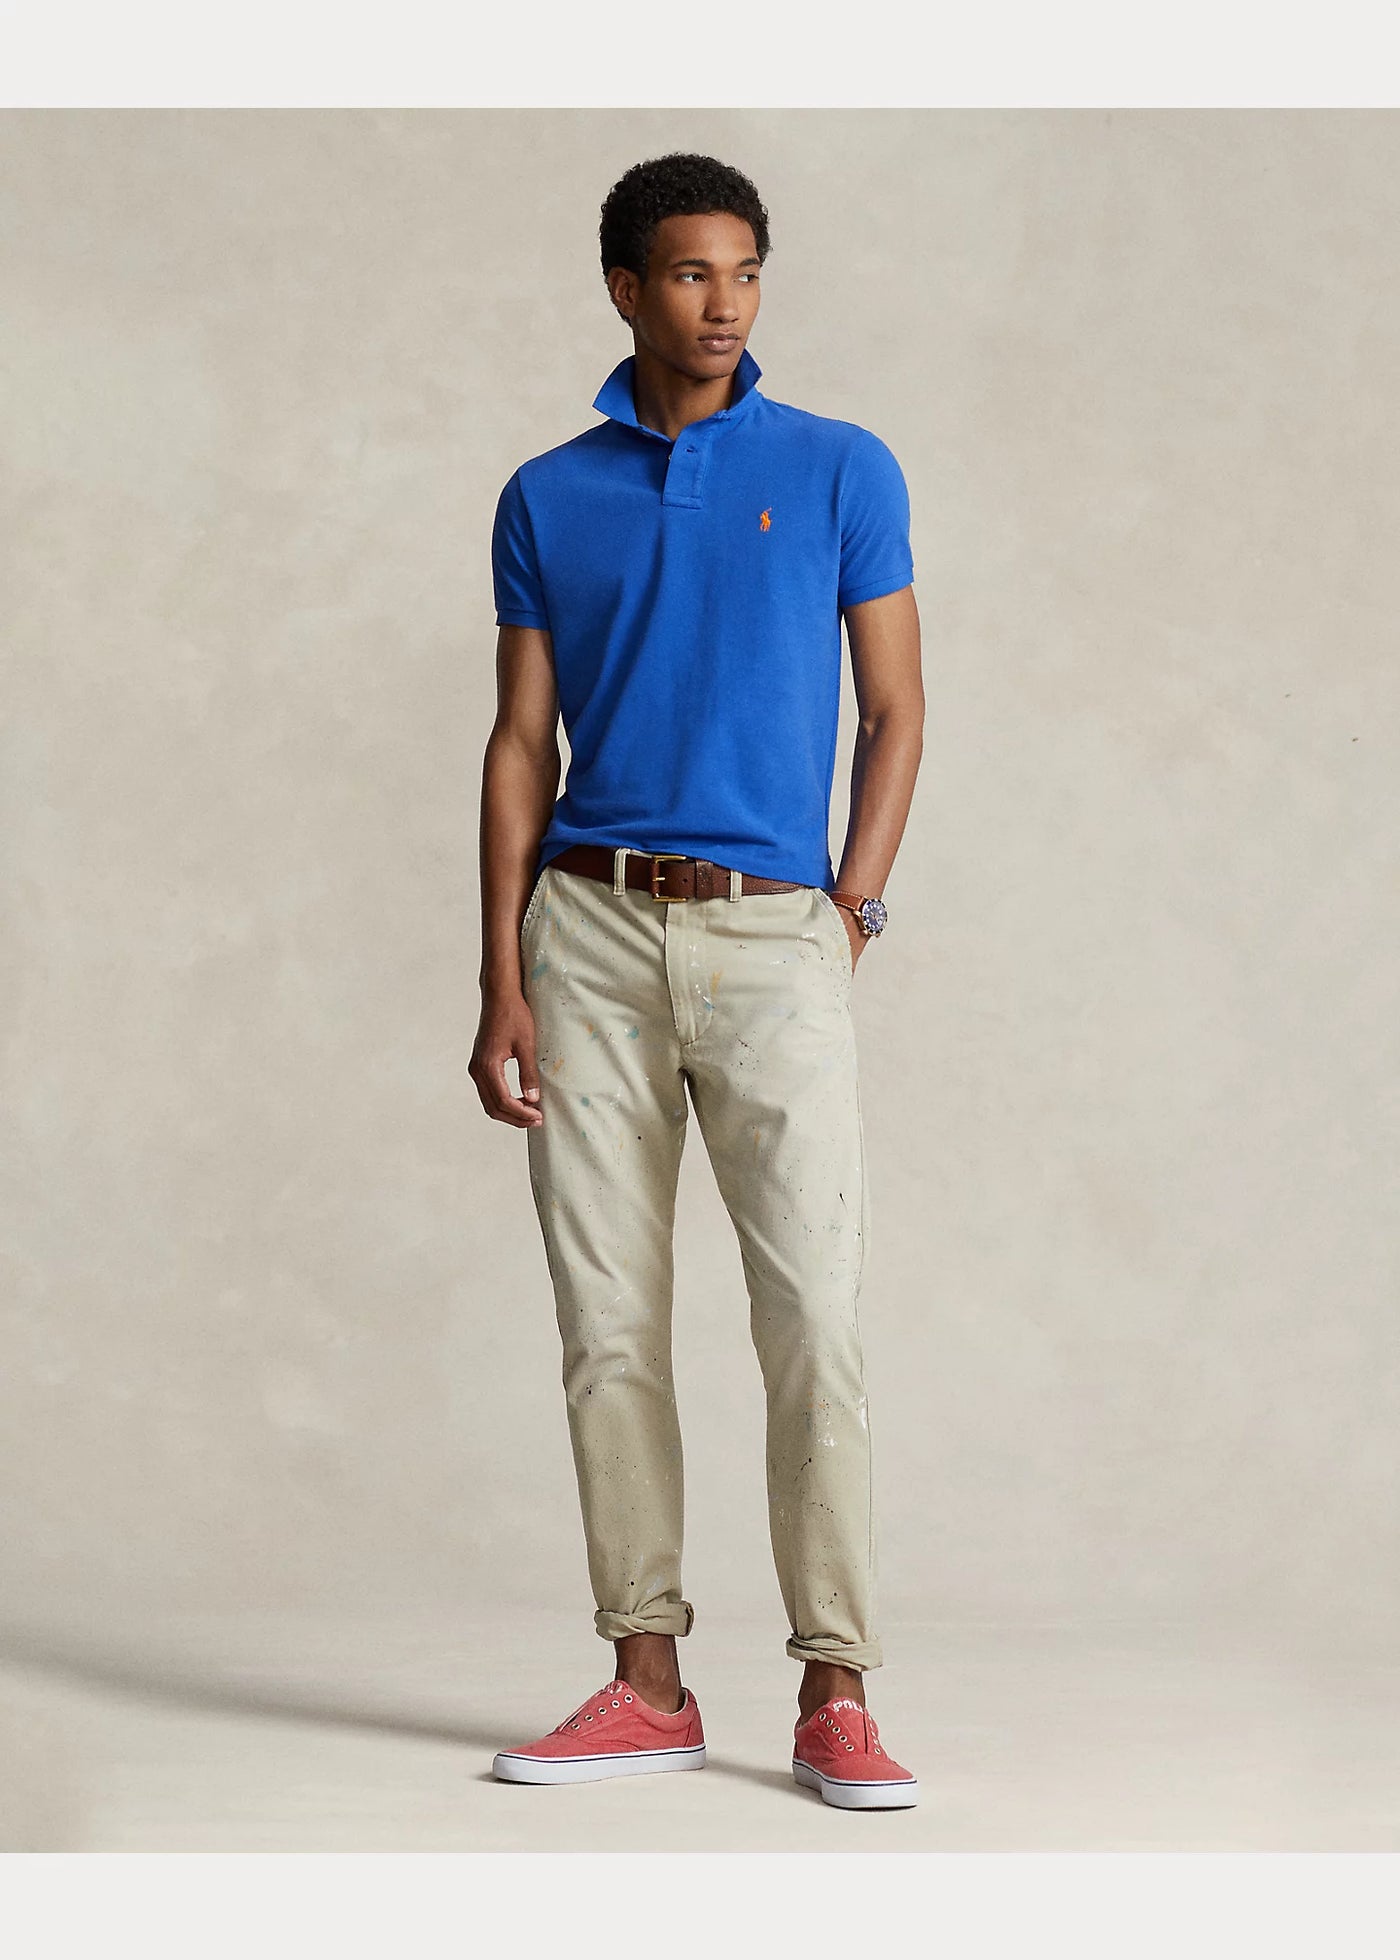 Ralph Lauren The Iconic Mesh Polo Shirt | New Iris Blue